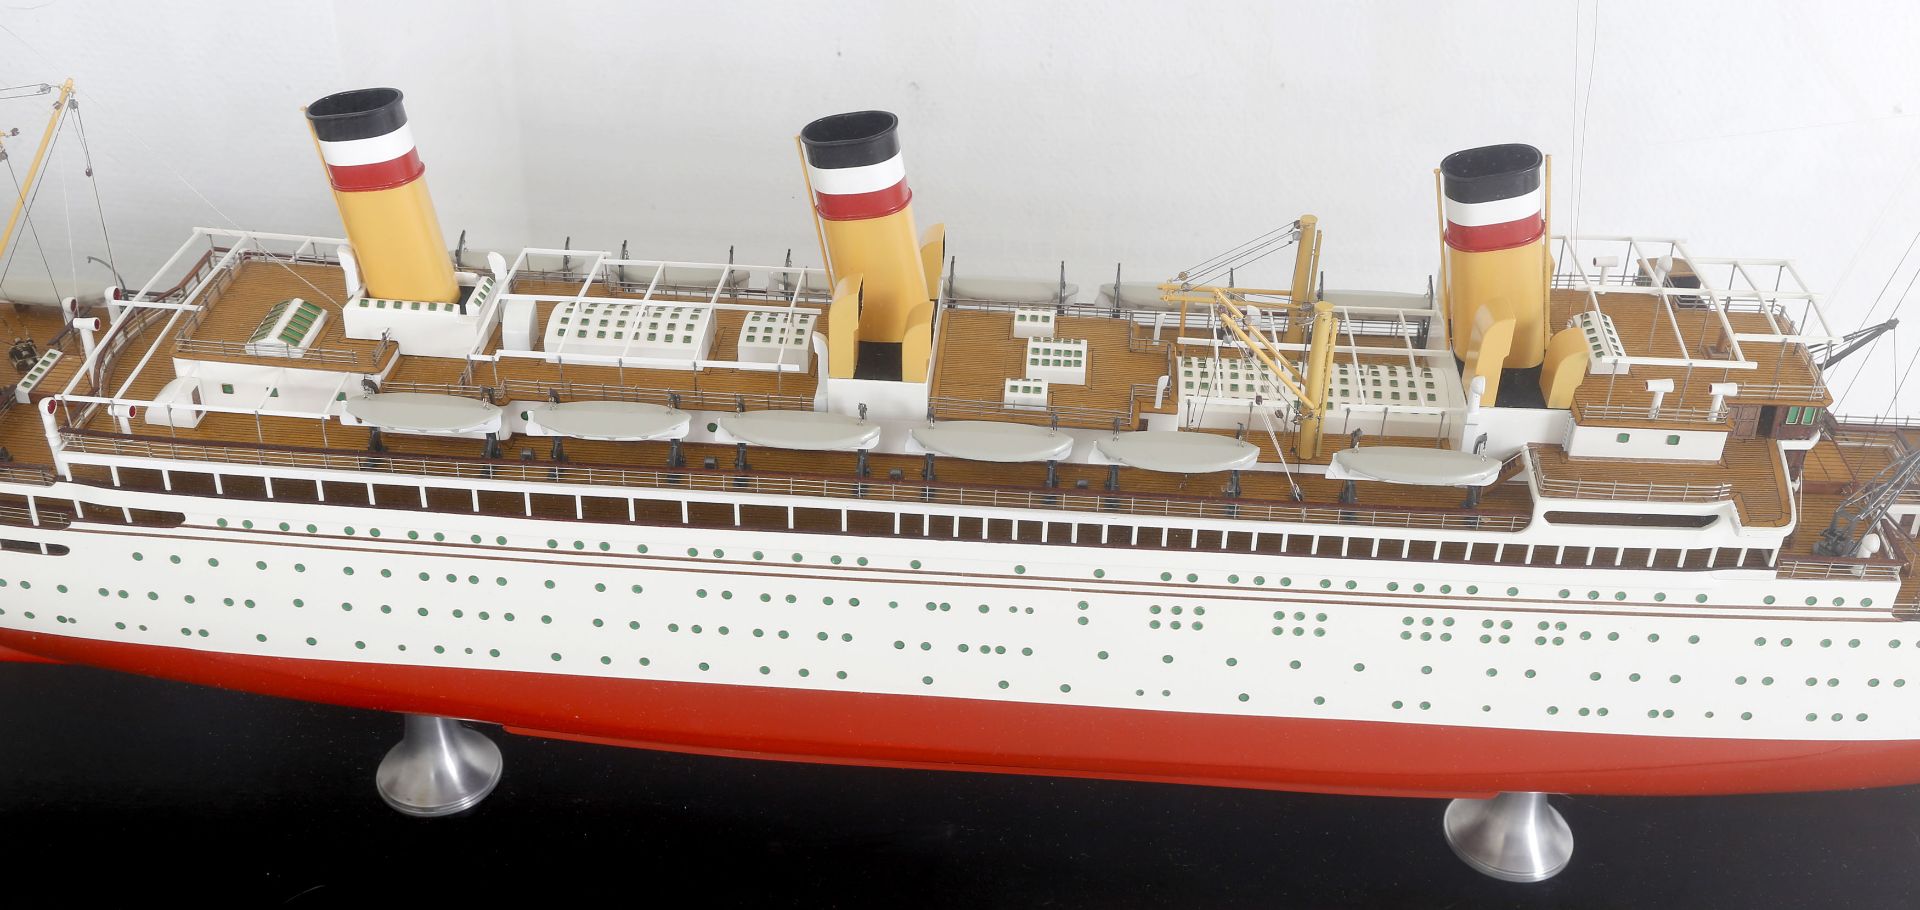 Schiffsmodell 'Reliance' ex 'Johann Heinrich Burchard', Maßstab 1:150, Jens Hachmann 2006 - Bild 4 aus 5